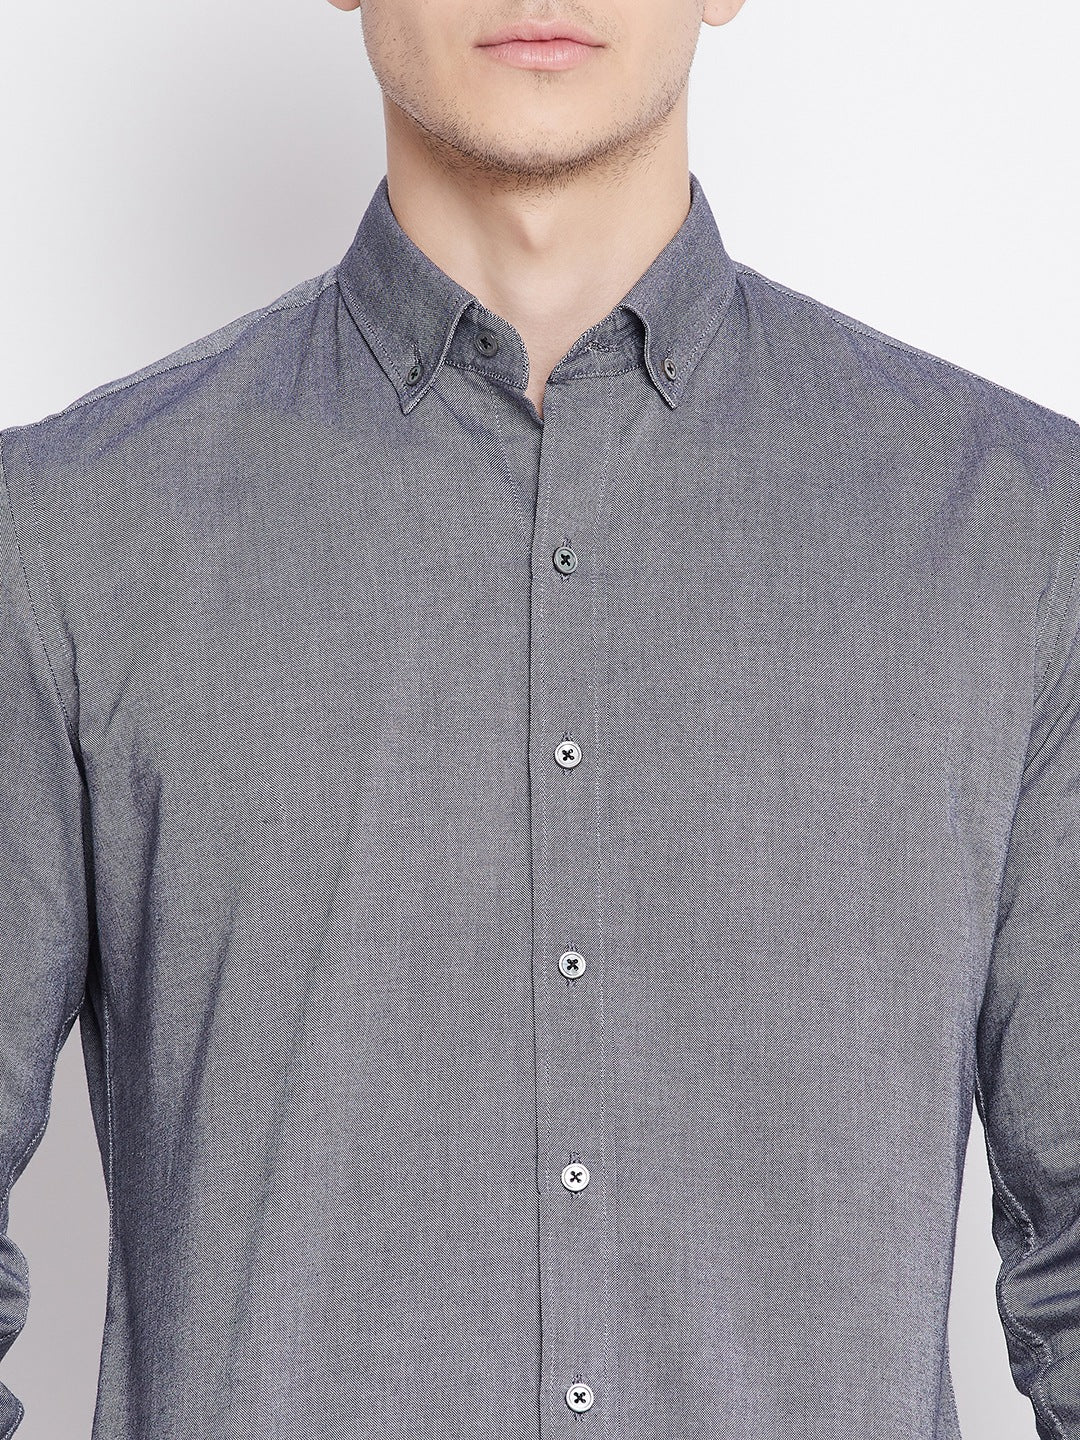 Steel Grey Oxford Cotton Shirt